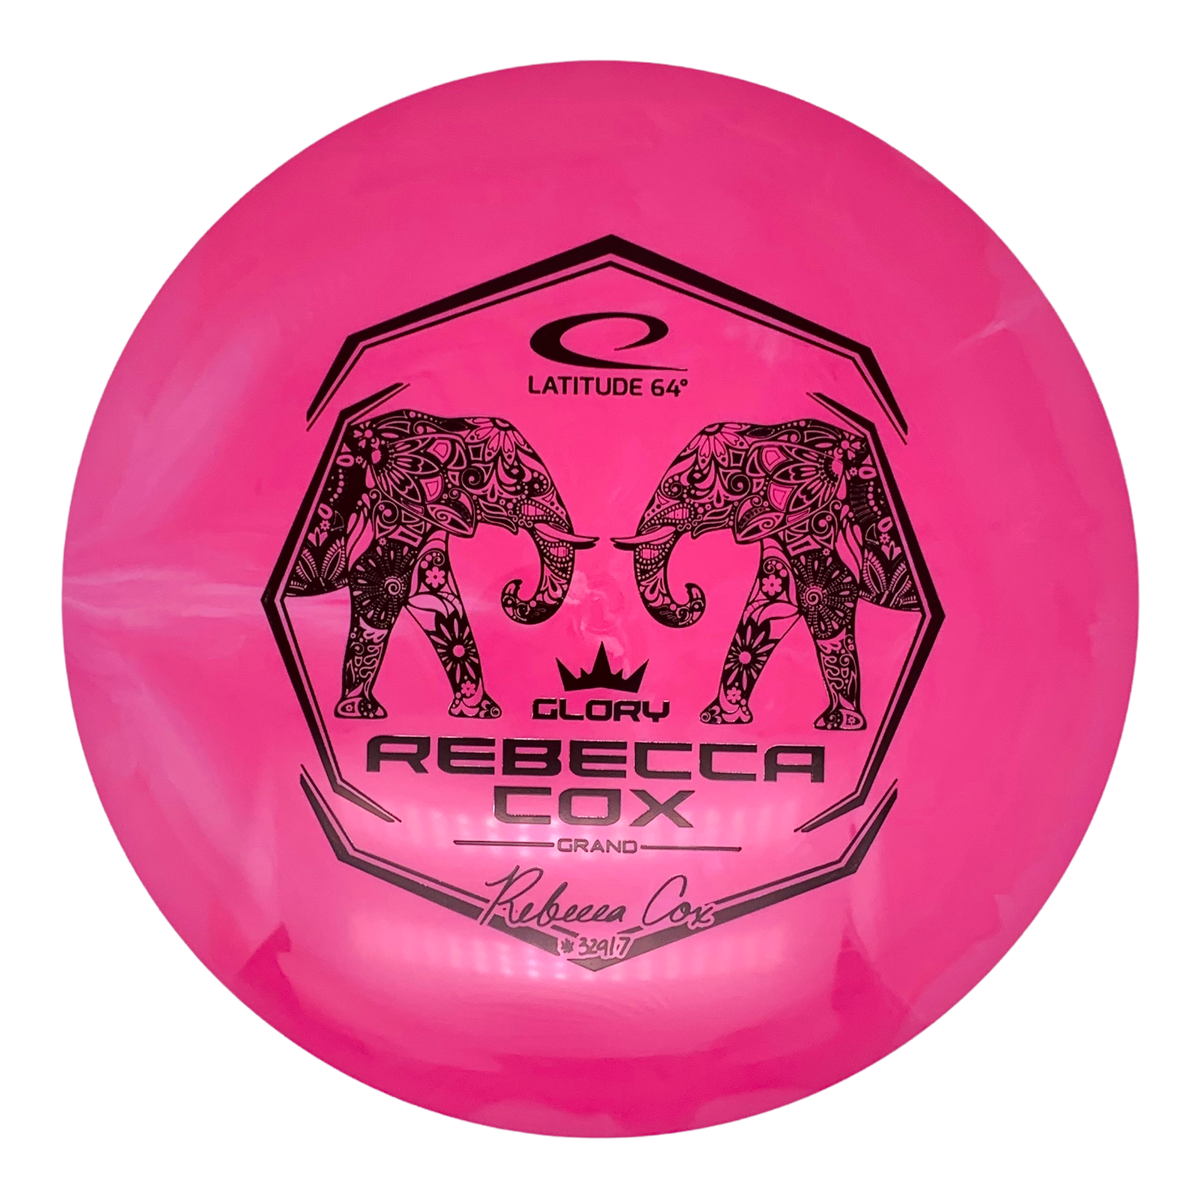 Latitude 64 Royal Grand Glory - Rebecca Cox Team Series